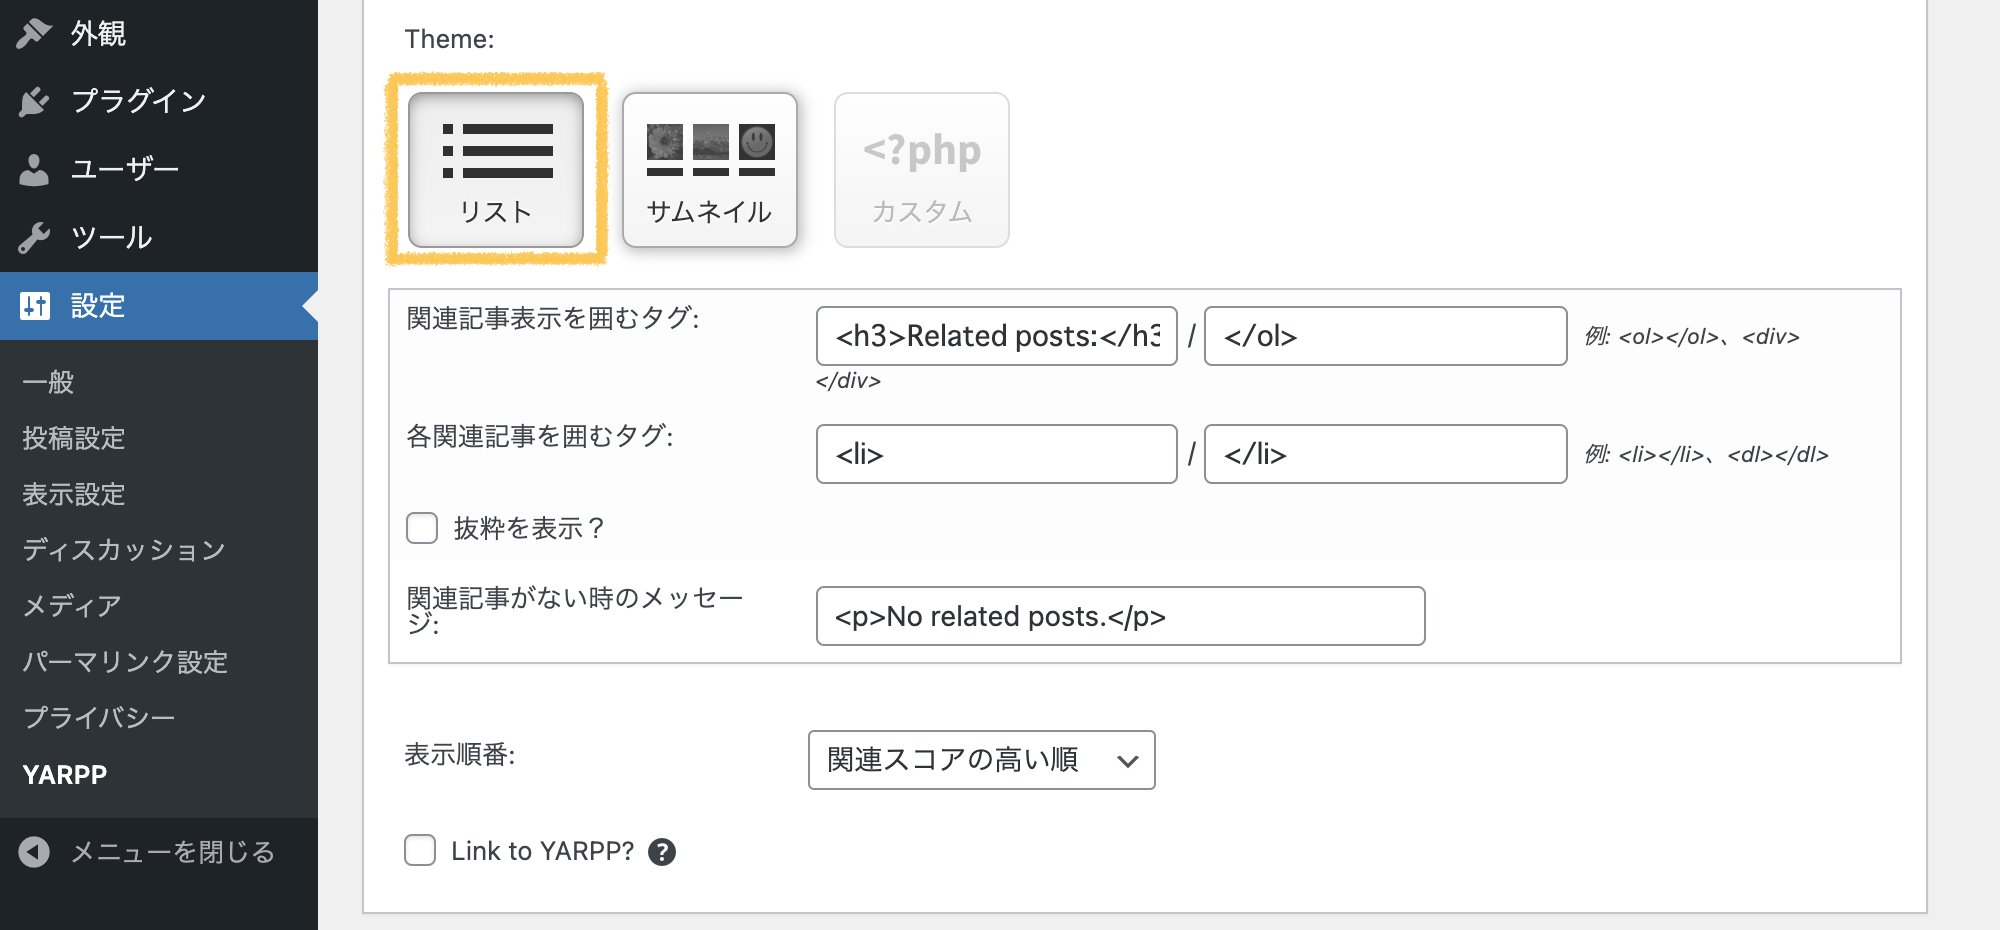 WordPressプラグイン「YARPP」の表示（Automatic Display Options）設定画面